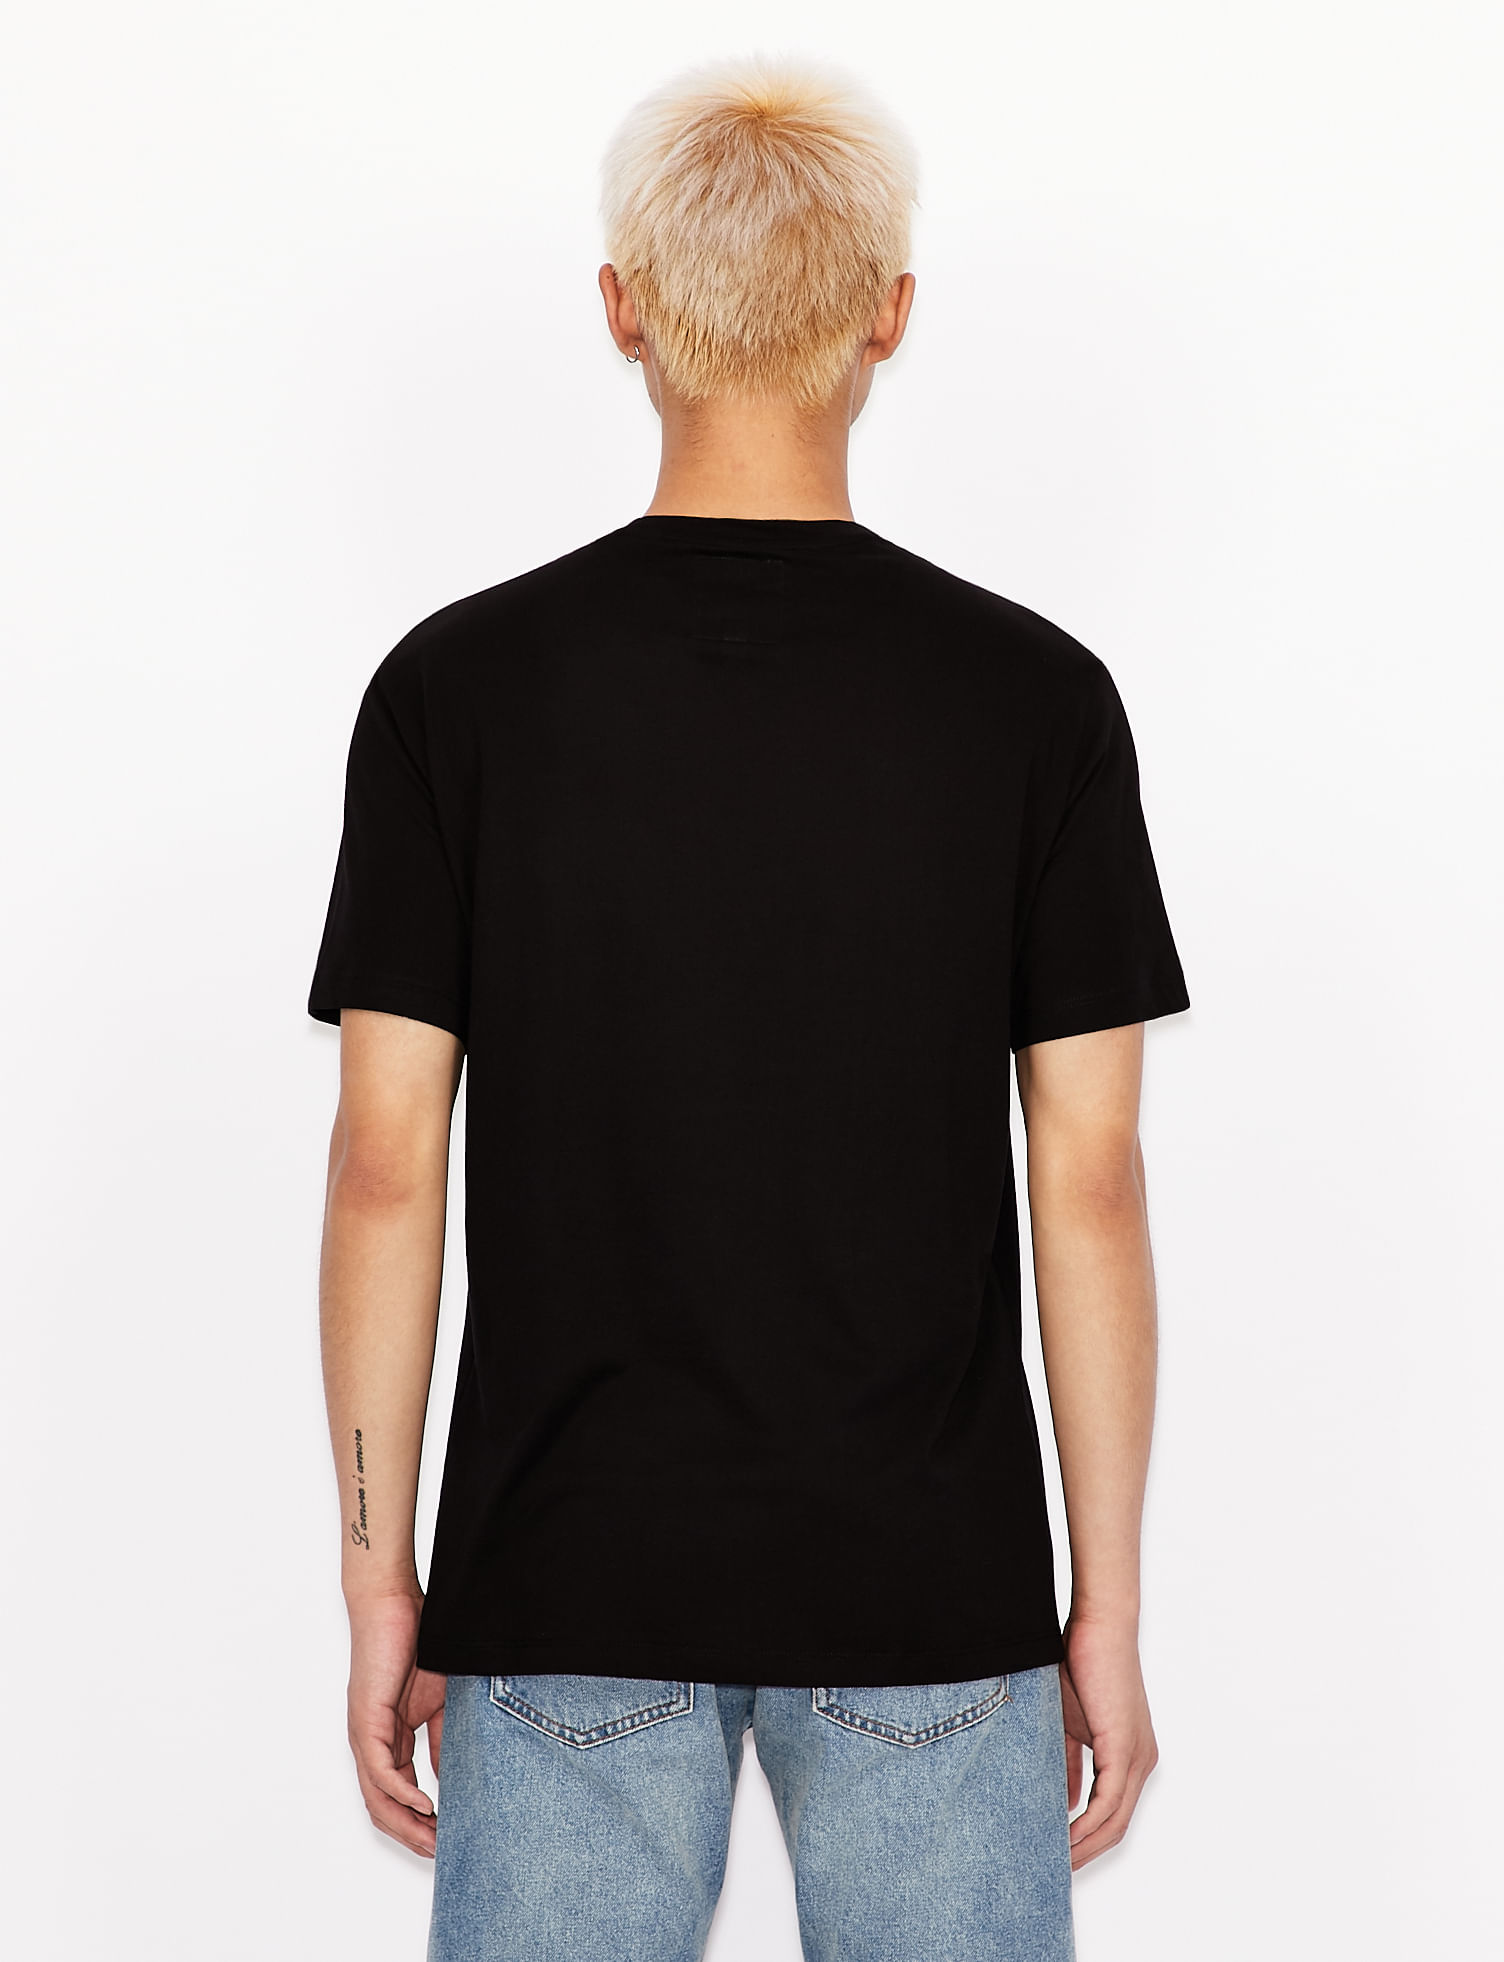 Camiseta Armani Exchange Regular Fit